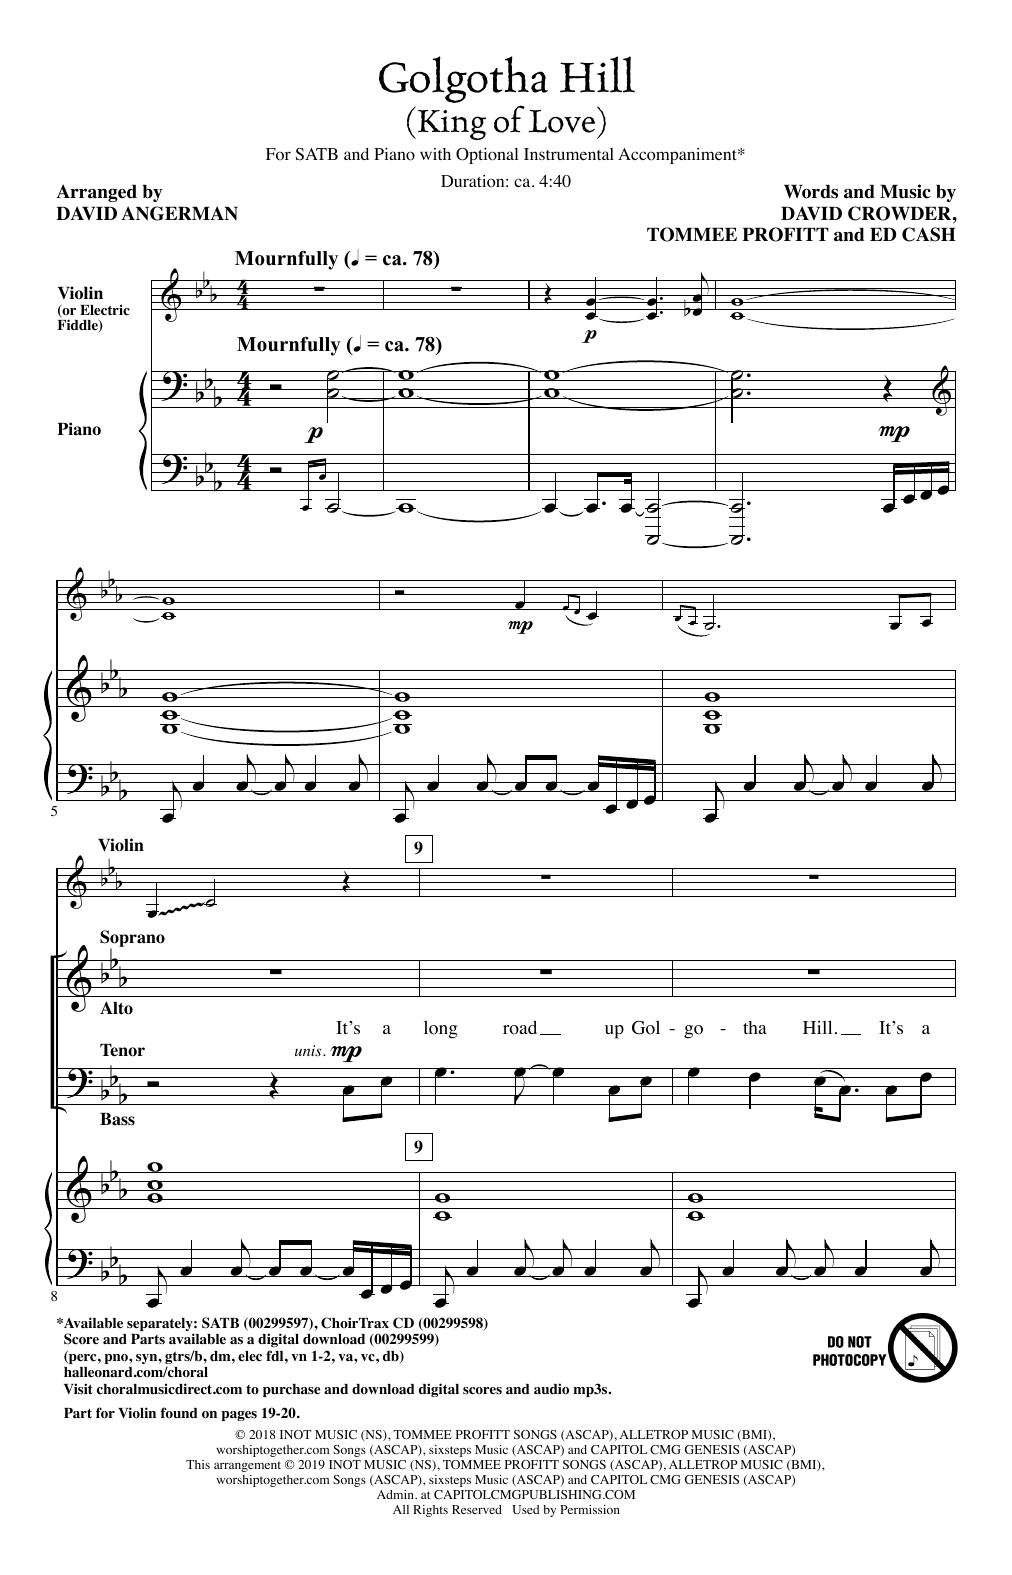 David Crowder Golgotha Hill (King Of Love) (arr. David Angerman) Sheet Music Notes & Chords for SATB Choir - Download or Print PDF